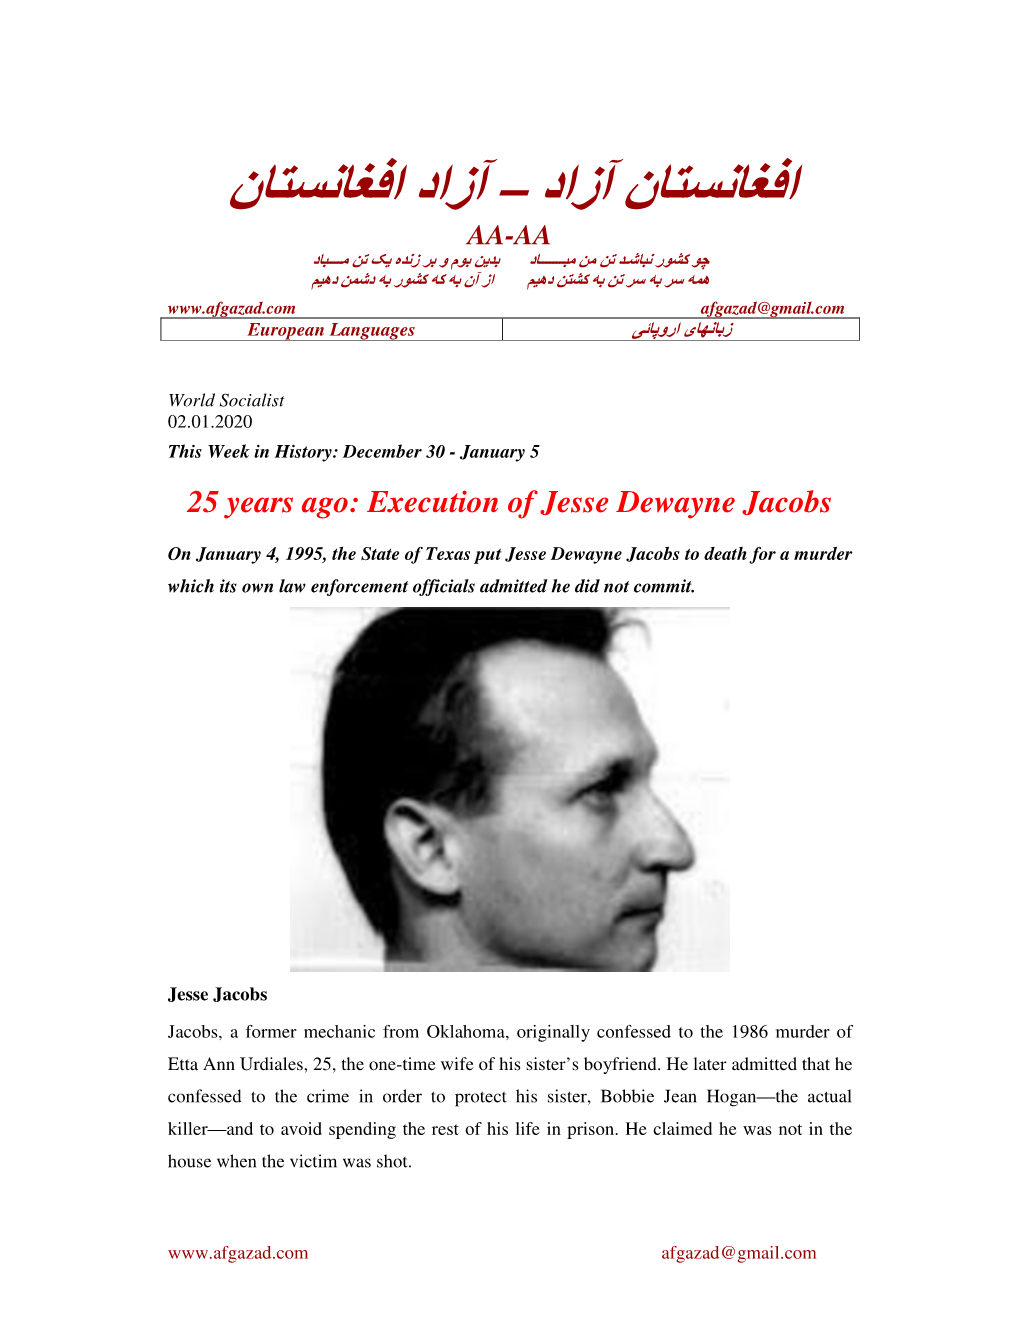 Execution of Jesse Dewayne Jacobs